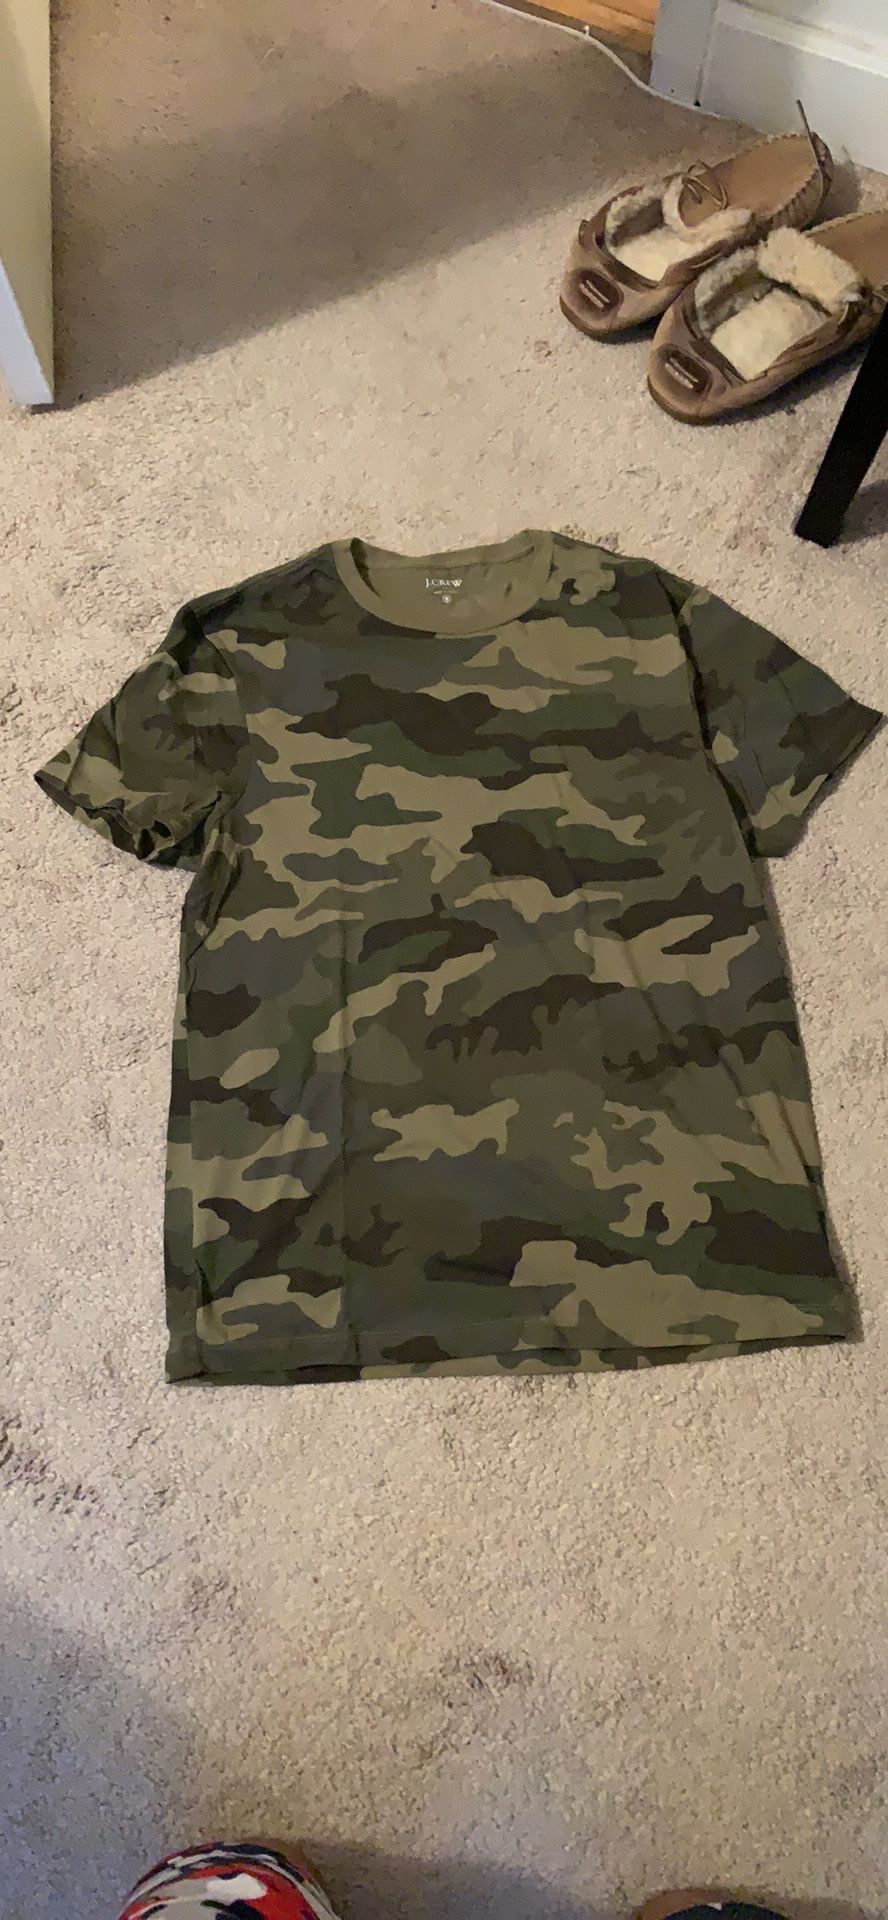 J. Crew Men’s Camo Print T-Shirt - Medium